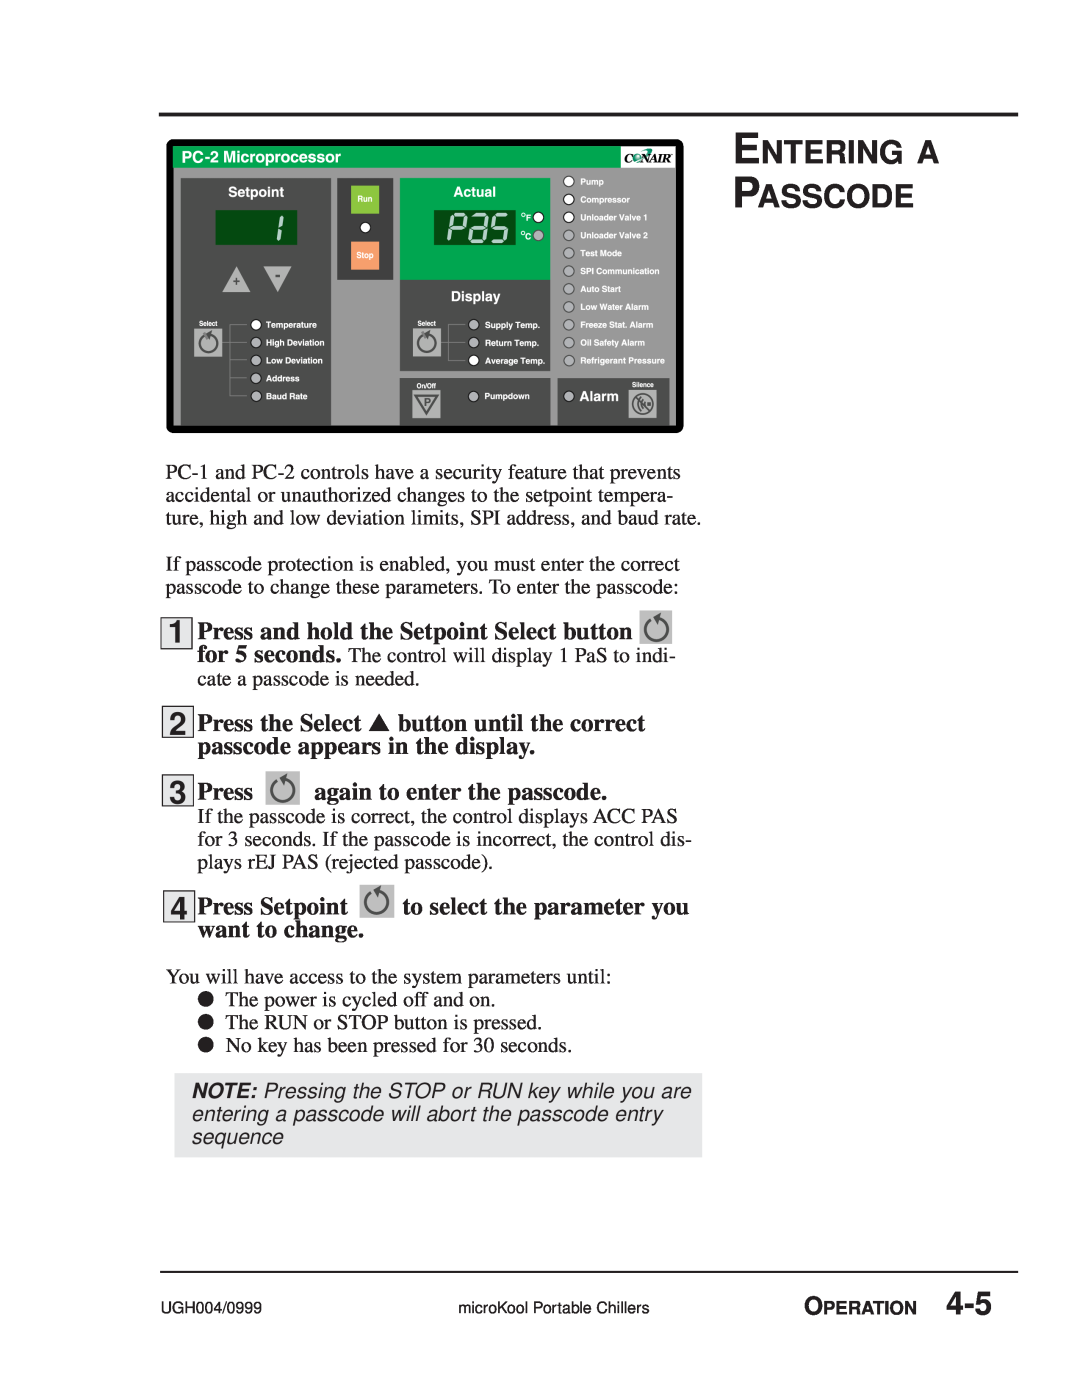 Conair MPW, MPA manual Entering A Passcode, Press again to enter the passcode 